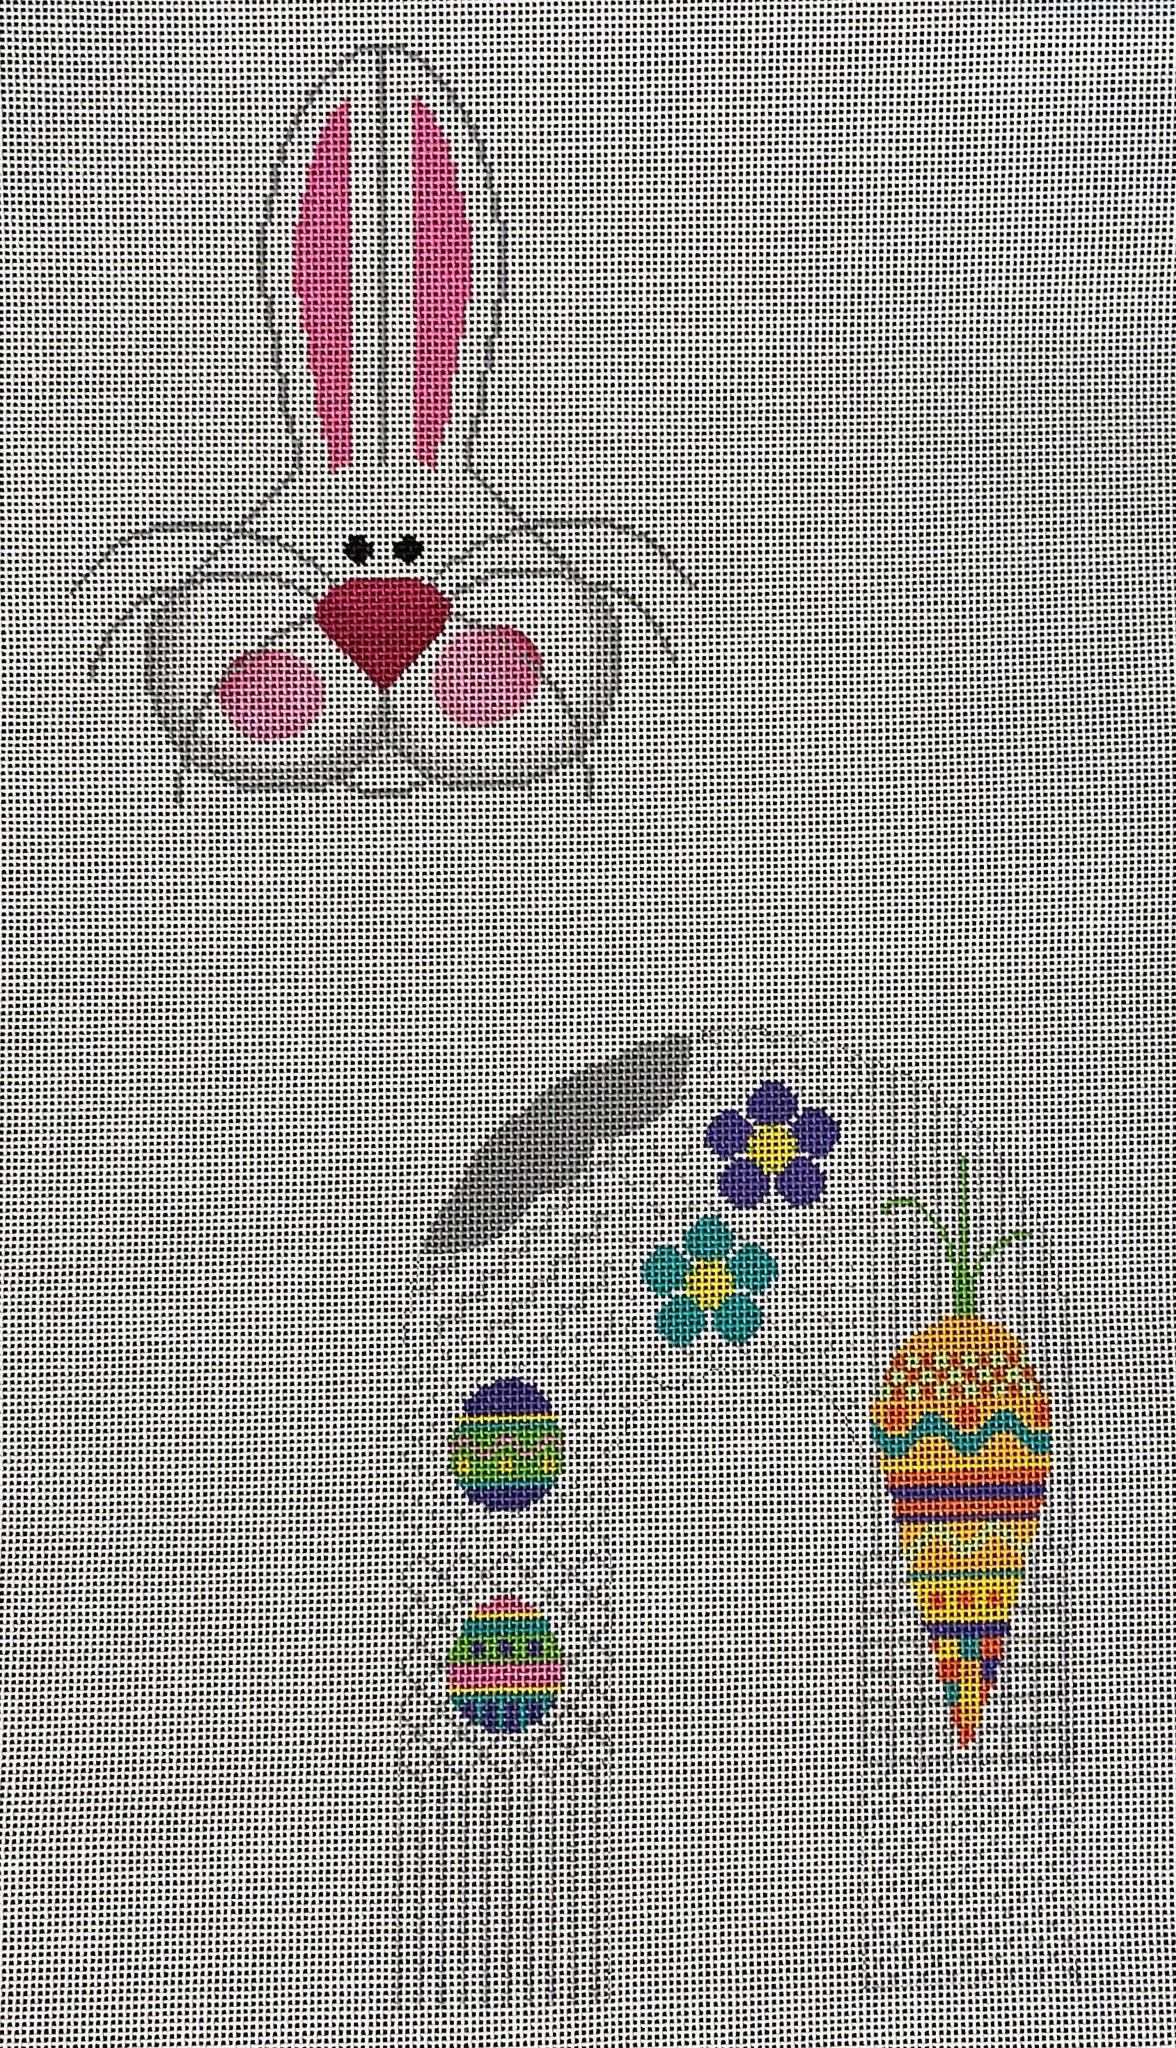 Easter Bunny - Family Arts Needlework Shop